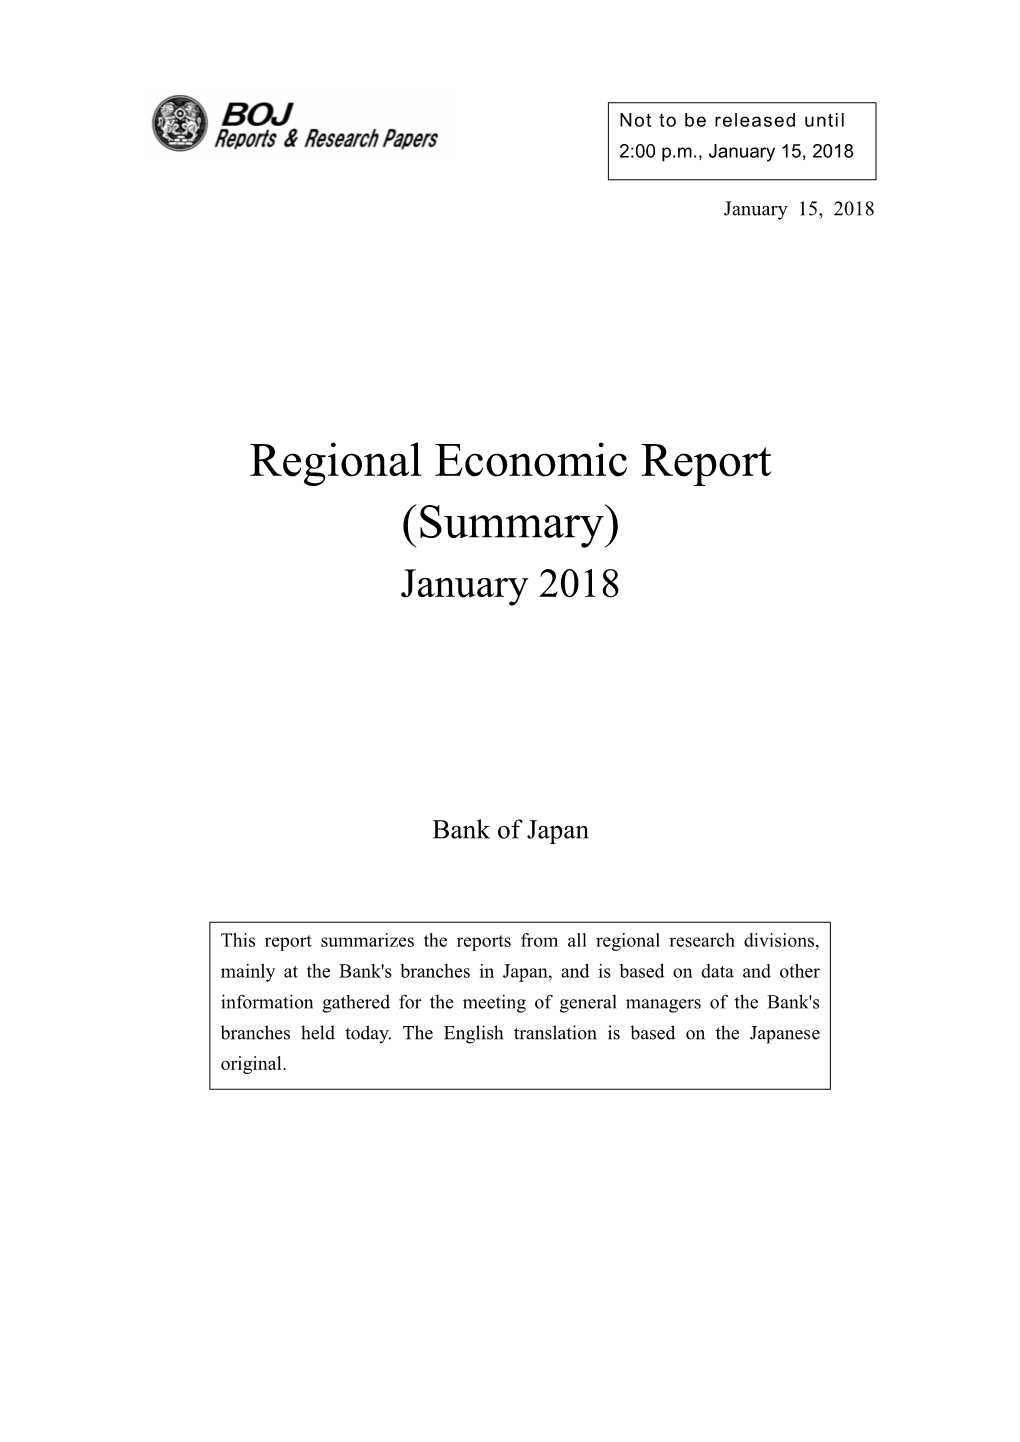 Regional Economic Report(Summary)